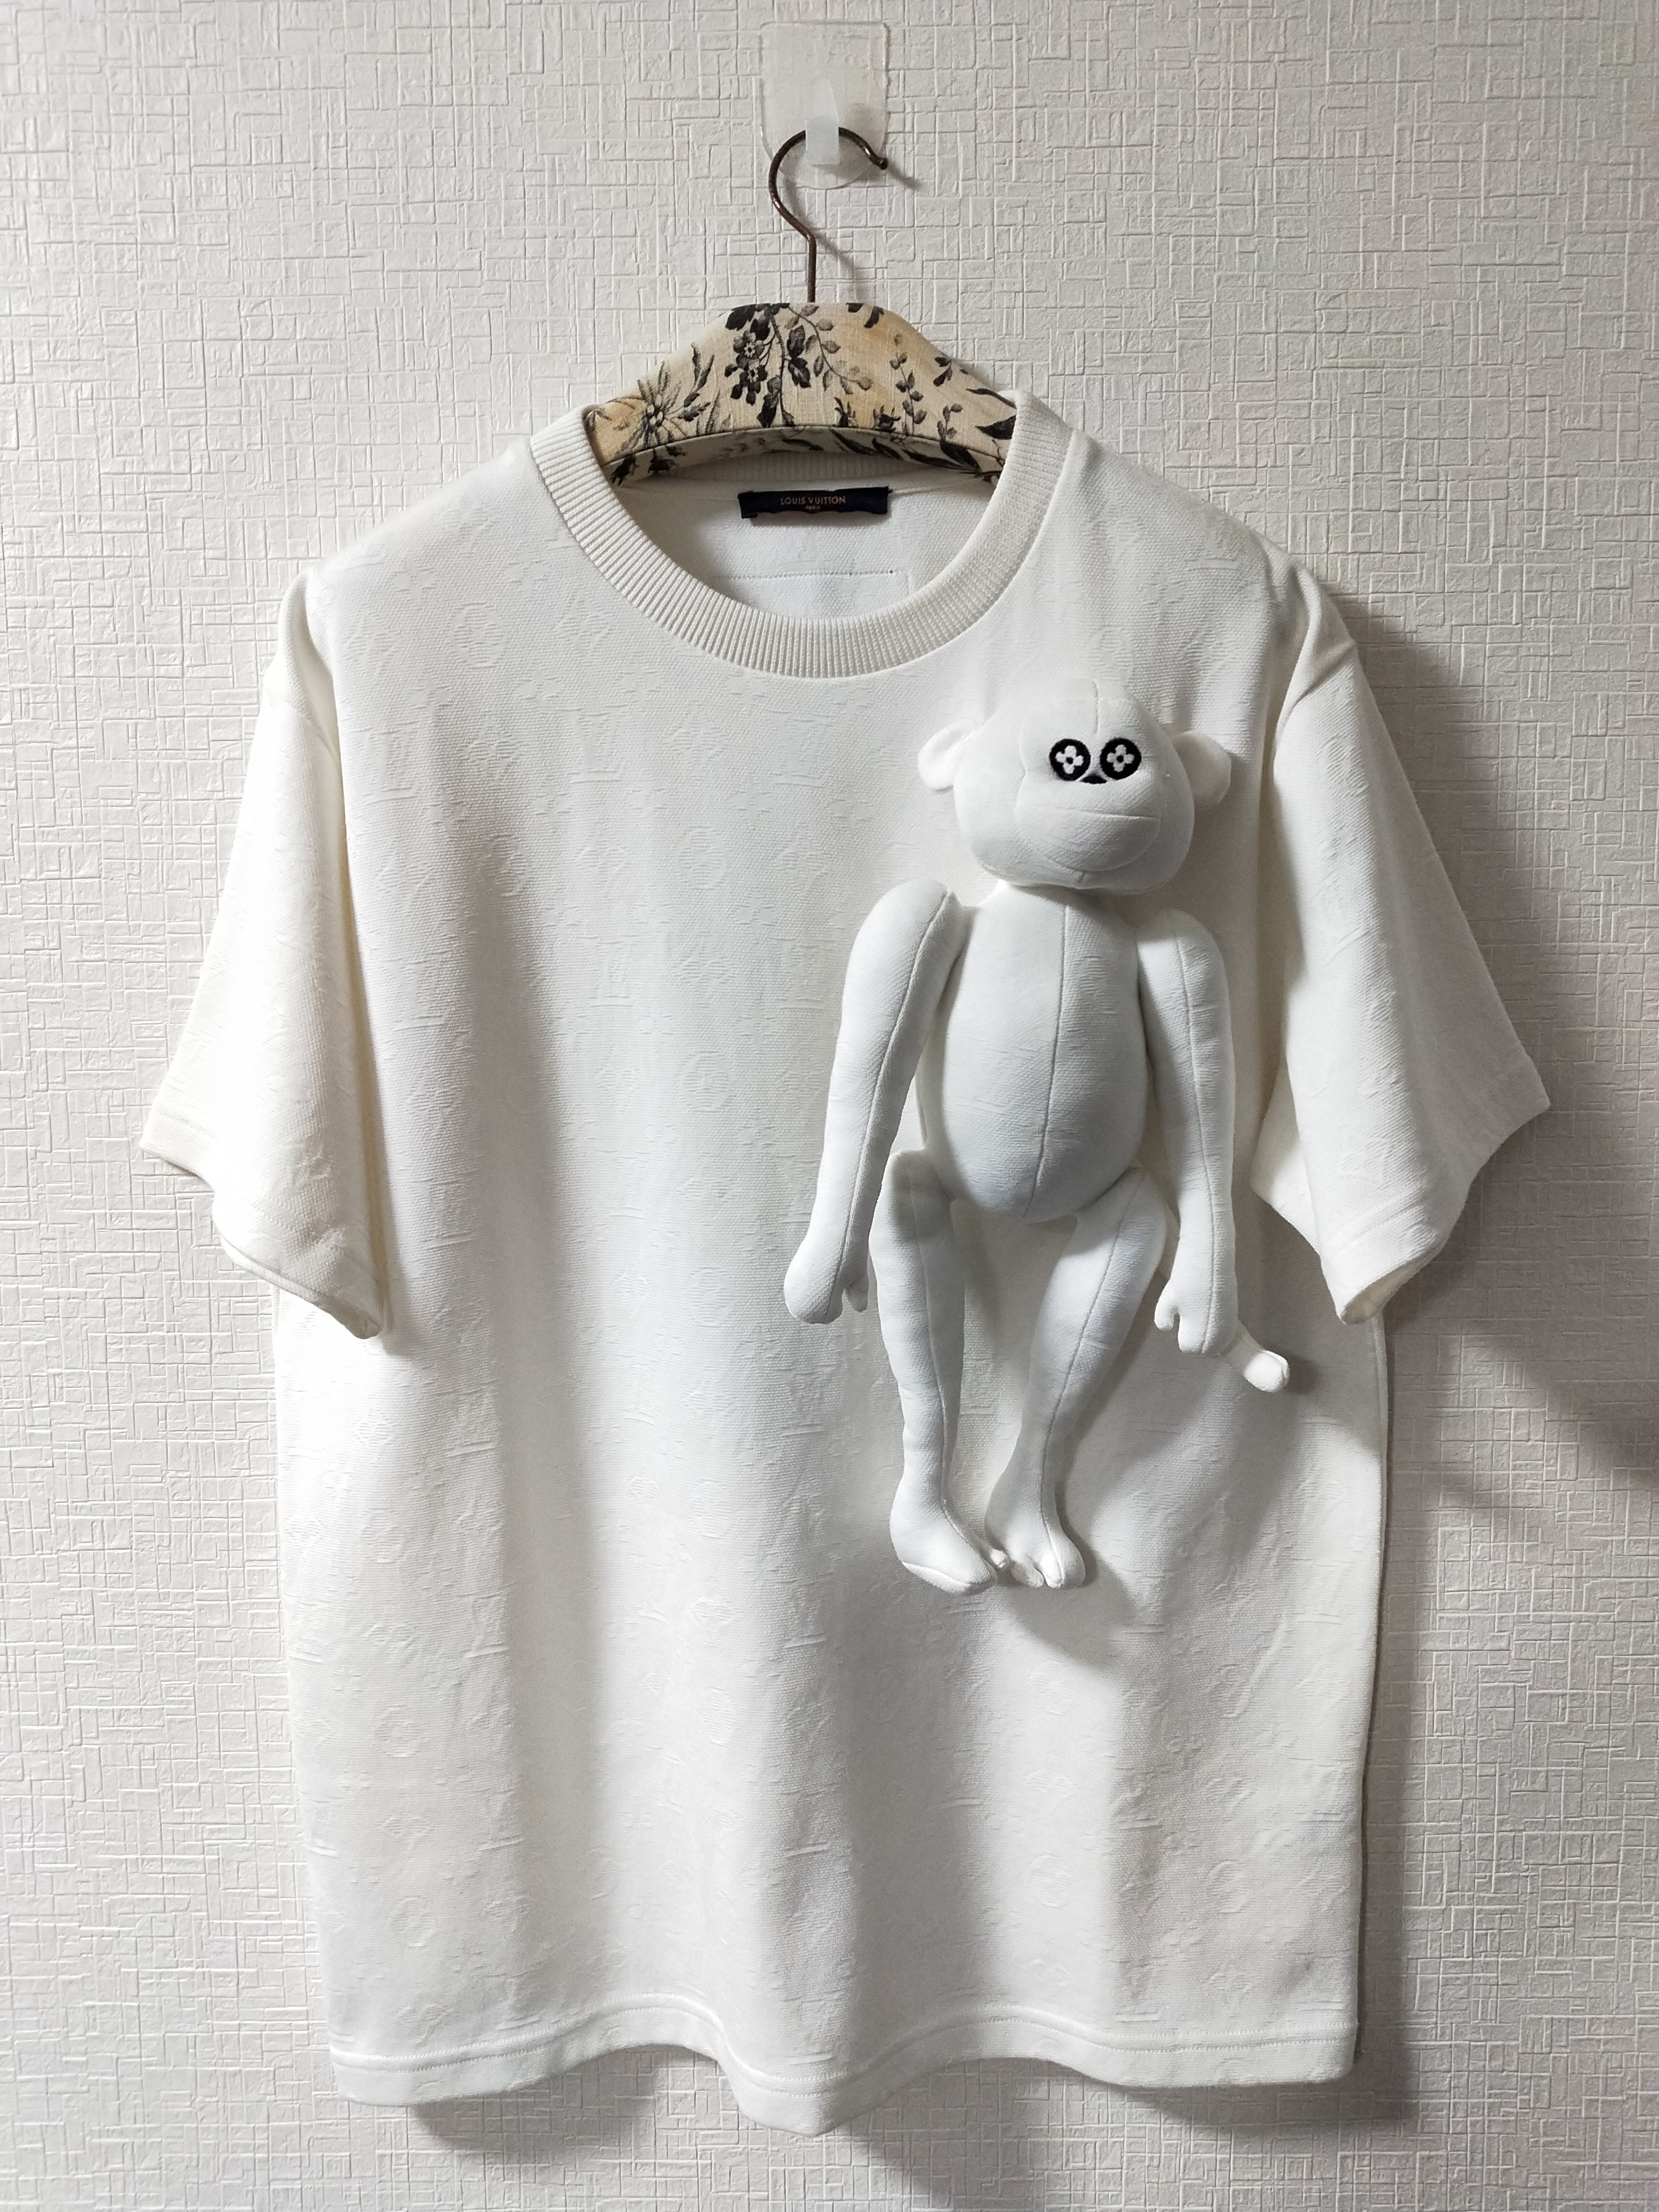 Louis Vuitton 3D Monkey Shirt